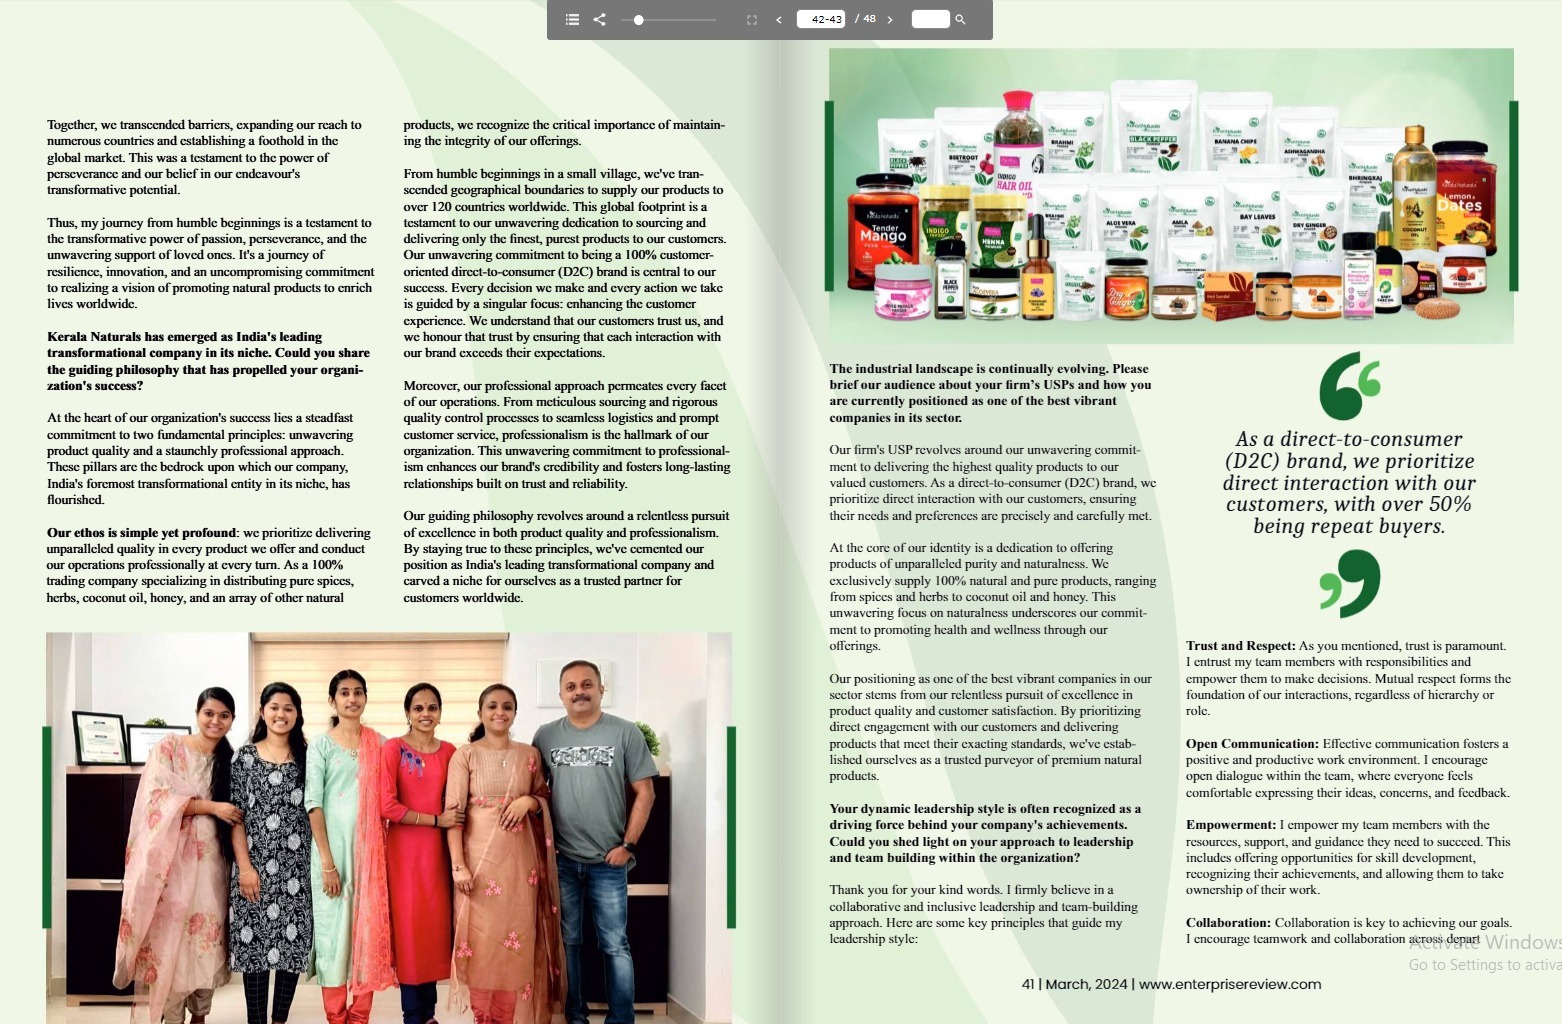 kerala naturals enterprise review cover